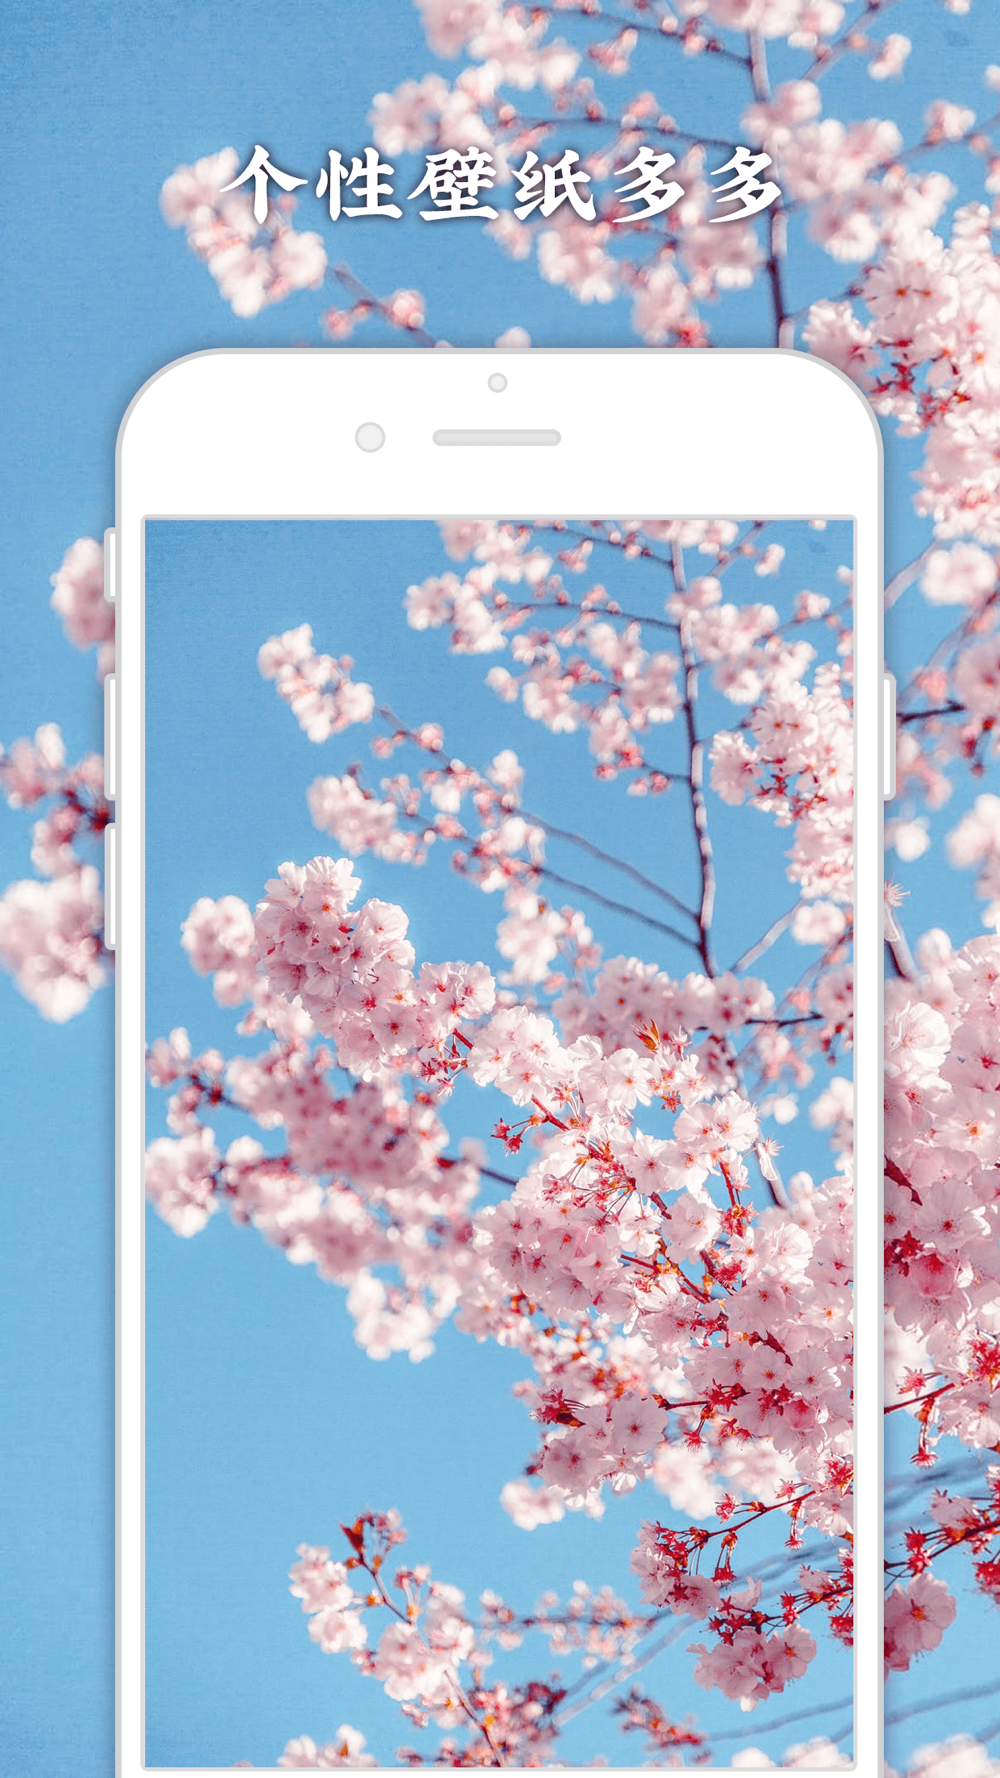 今日壁纸 精选高清手机壁纸软件free Download App For Iphone Steprimo Com